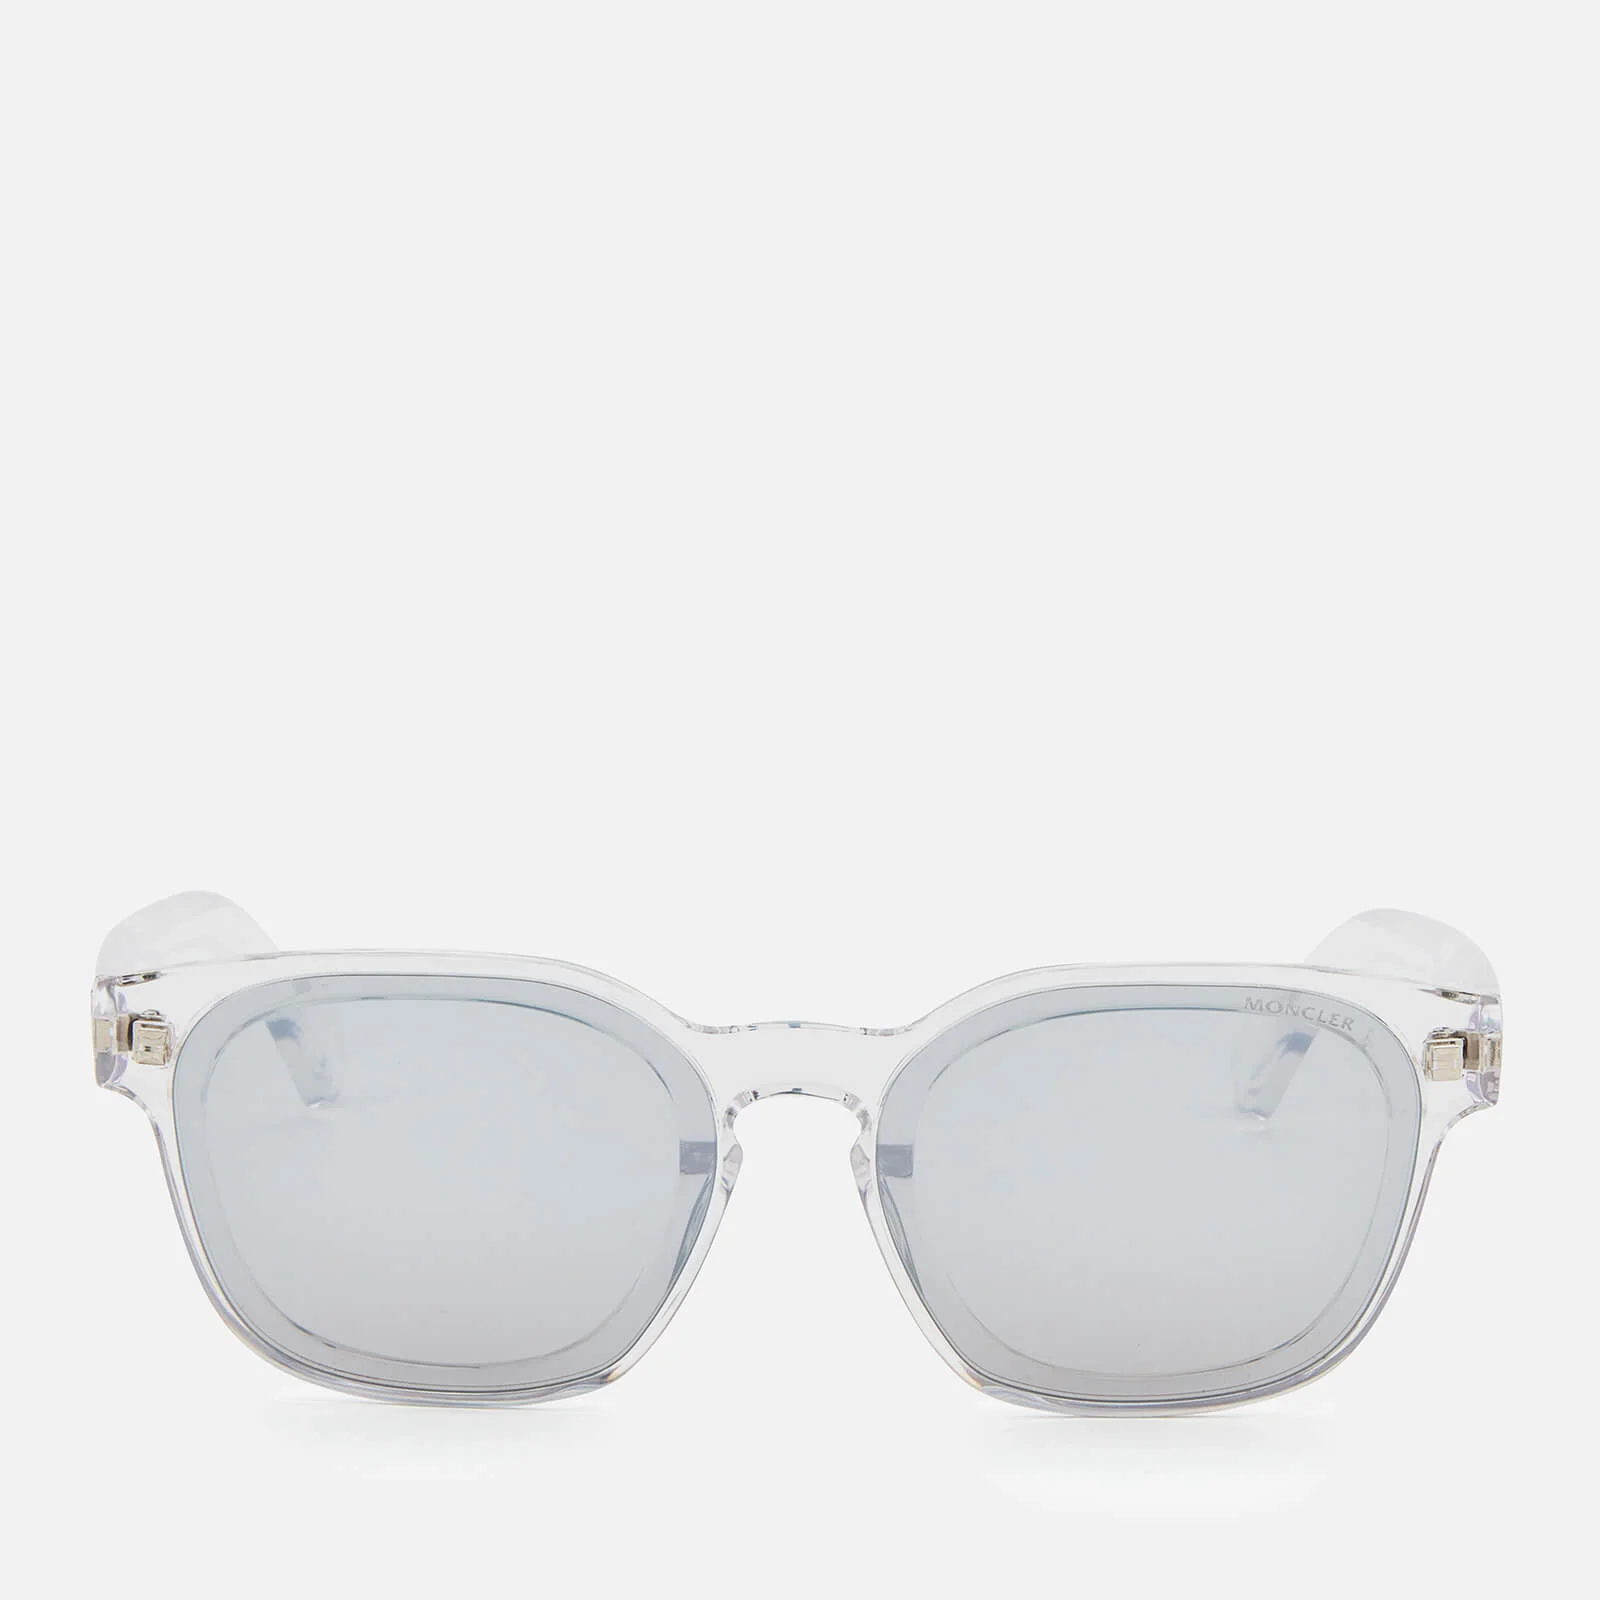 Moncler Men's Square Acetate Sunglasses - Crystal/Smoke Image 1